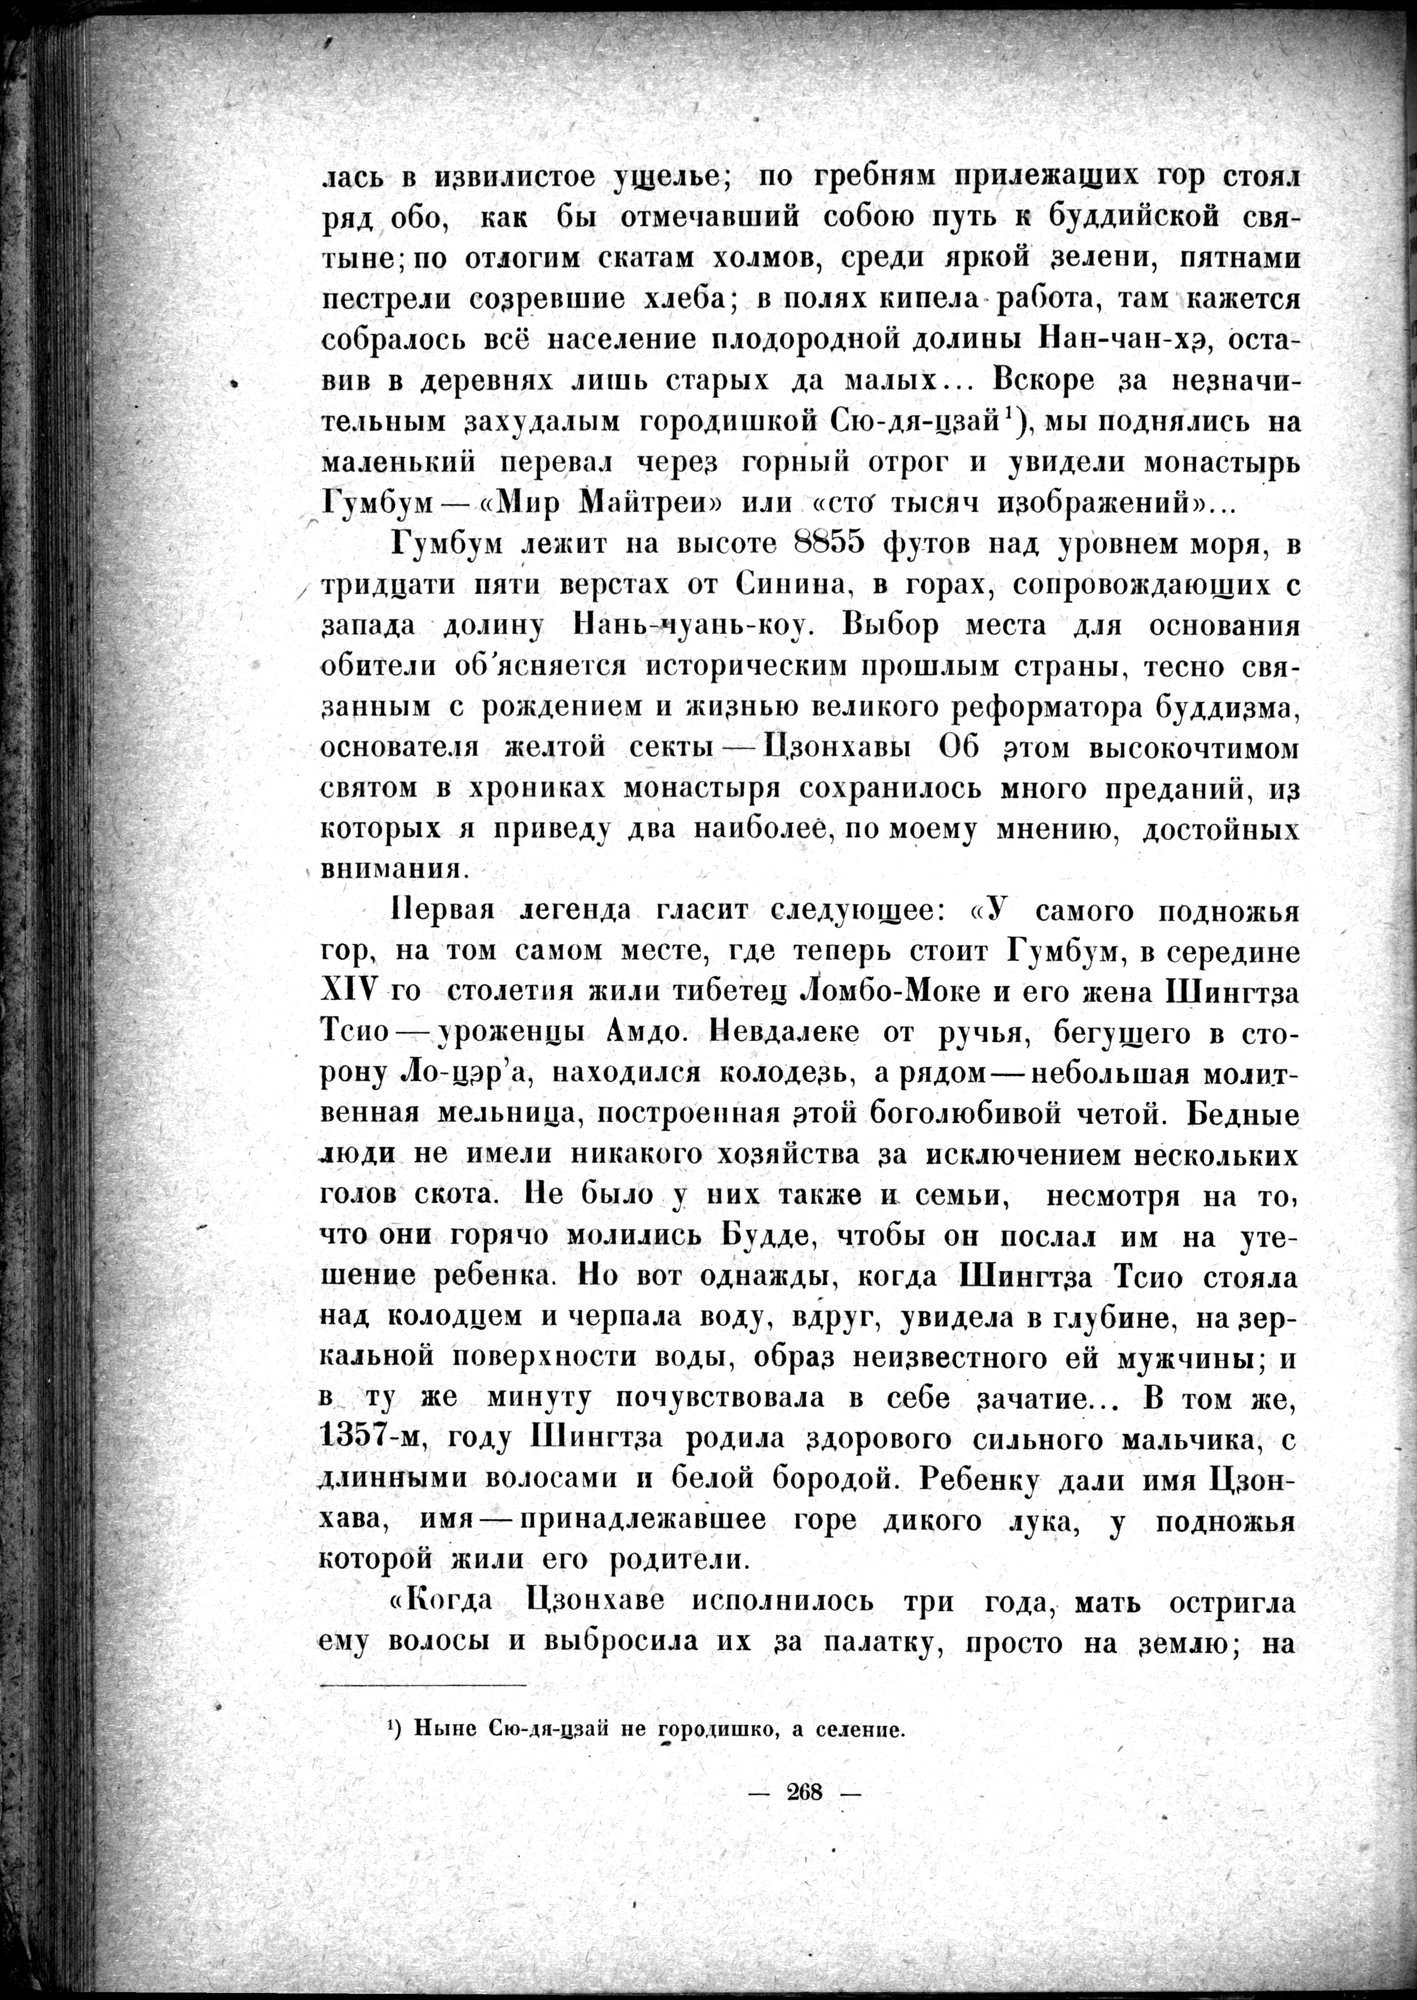 Mongoliya i Amdo i mertby gorod Khara-Khoto : vol.1 / Page 318 (Grayscale High Resolution Image)